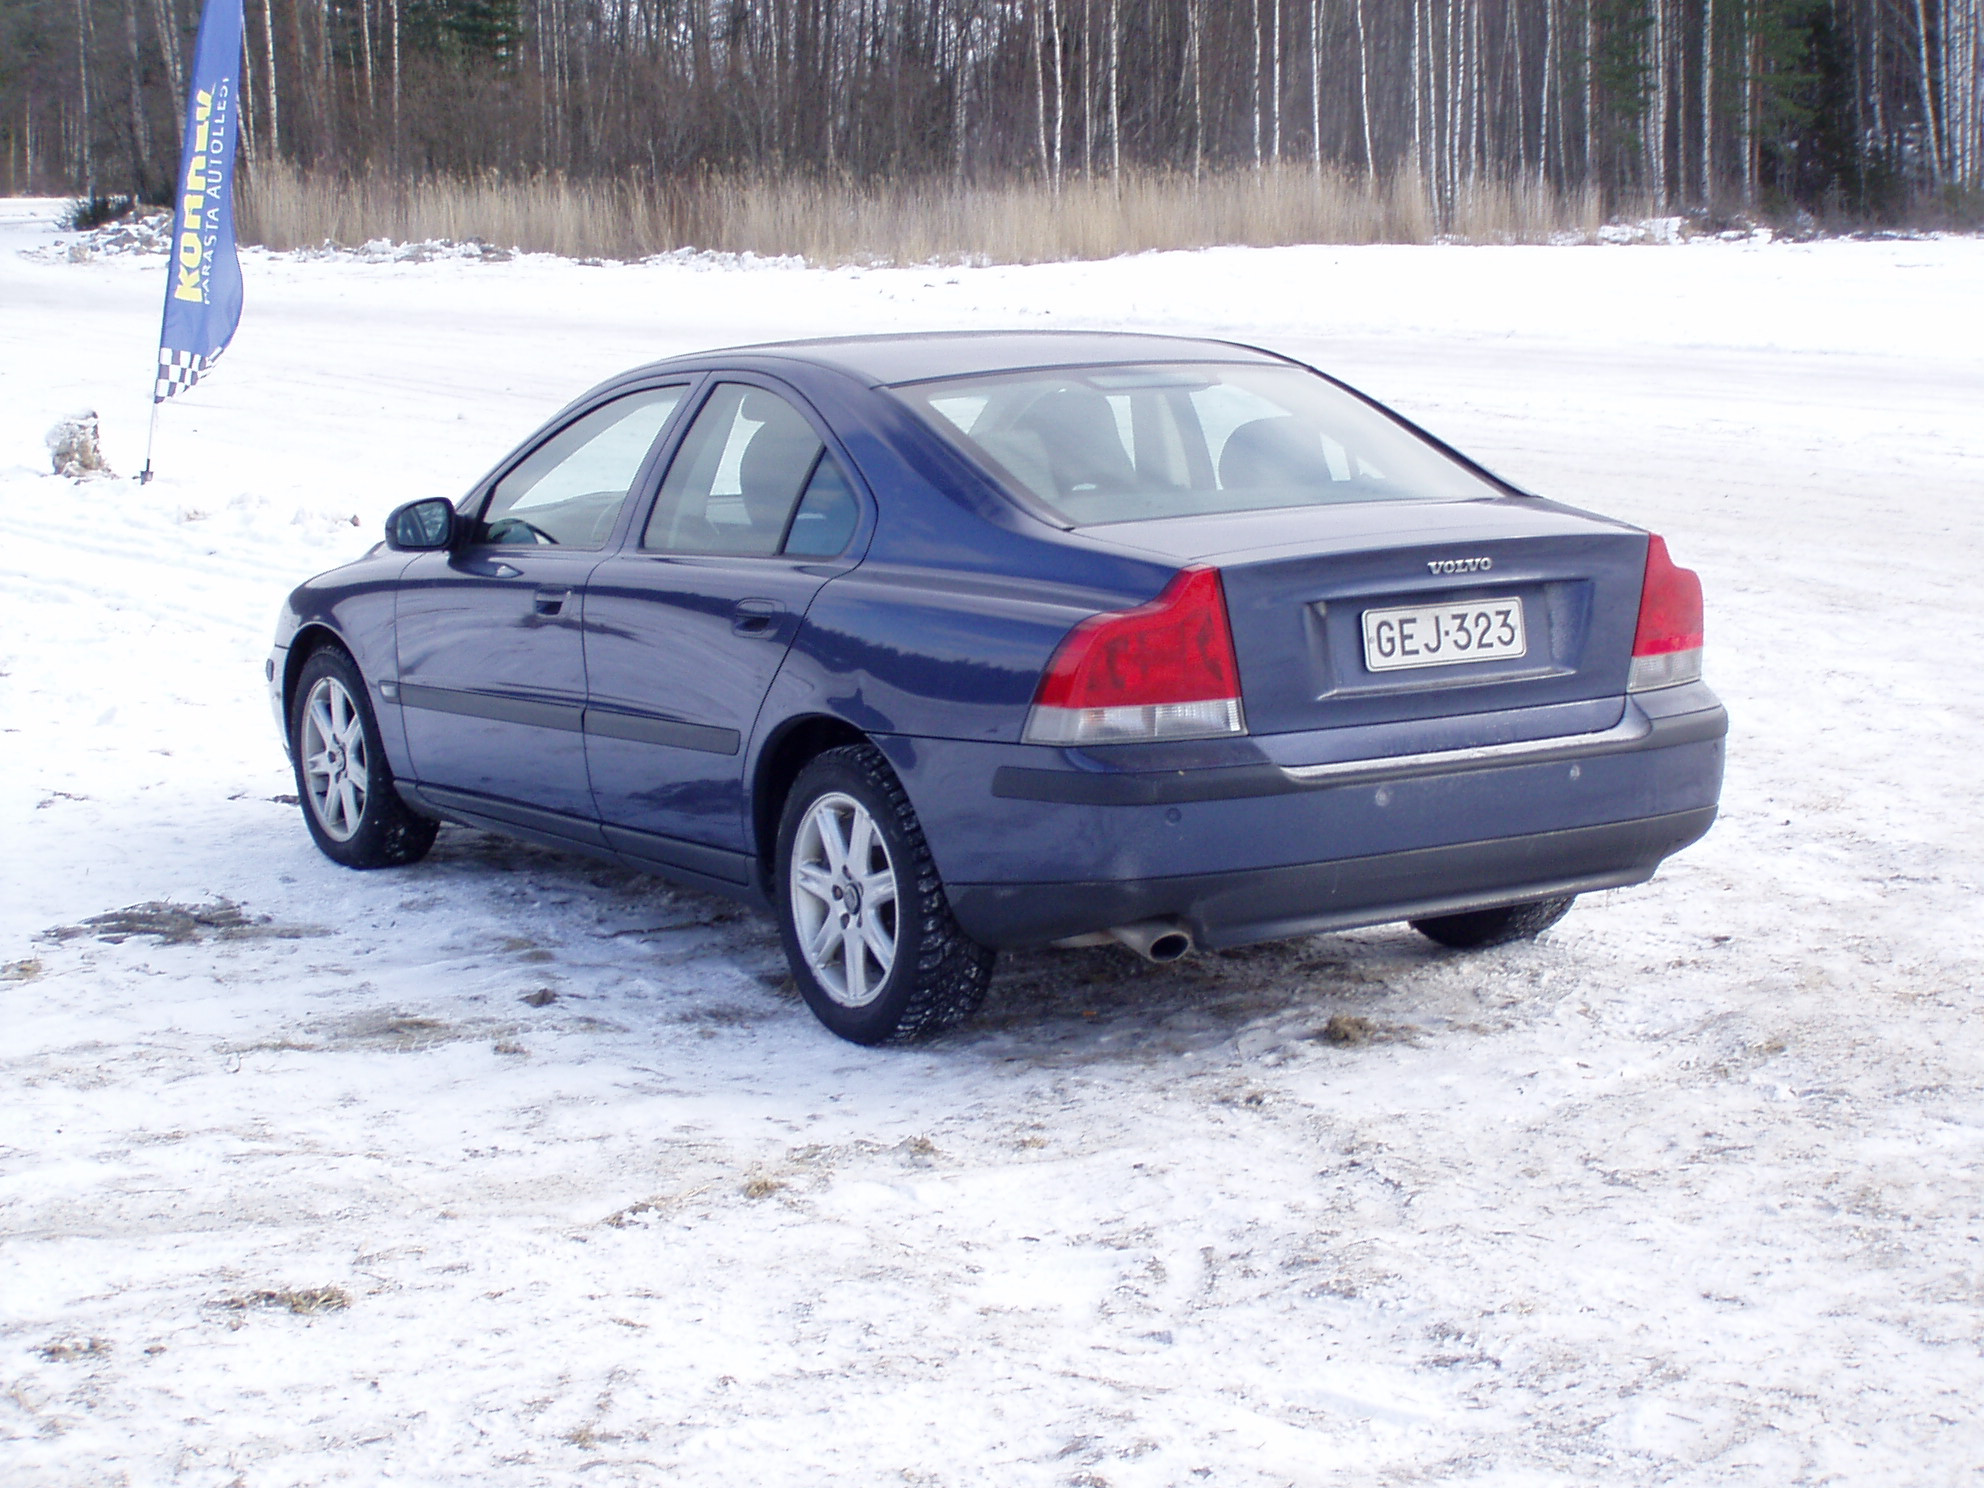 X-Treme talviajot 12.3.2005, Sininen Volvo